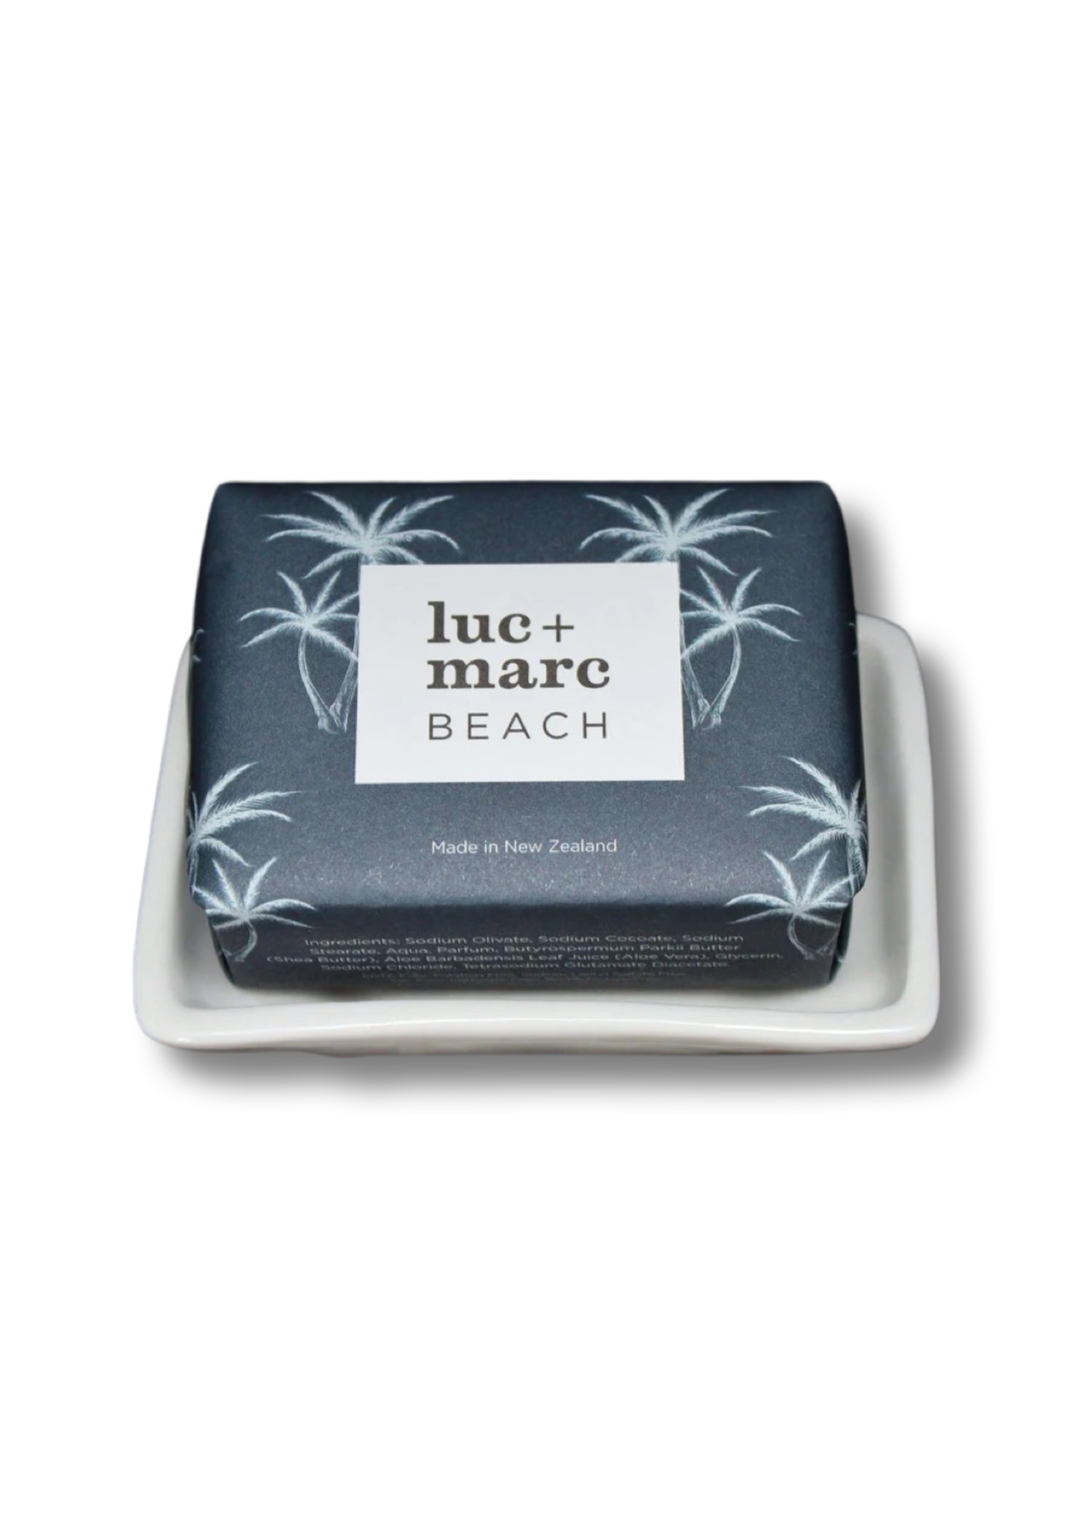 luc + marc 'Beach' Luxury Soap - Frangipani, Lime & Toasted Coconut